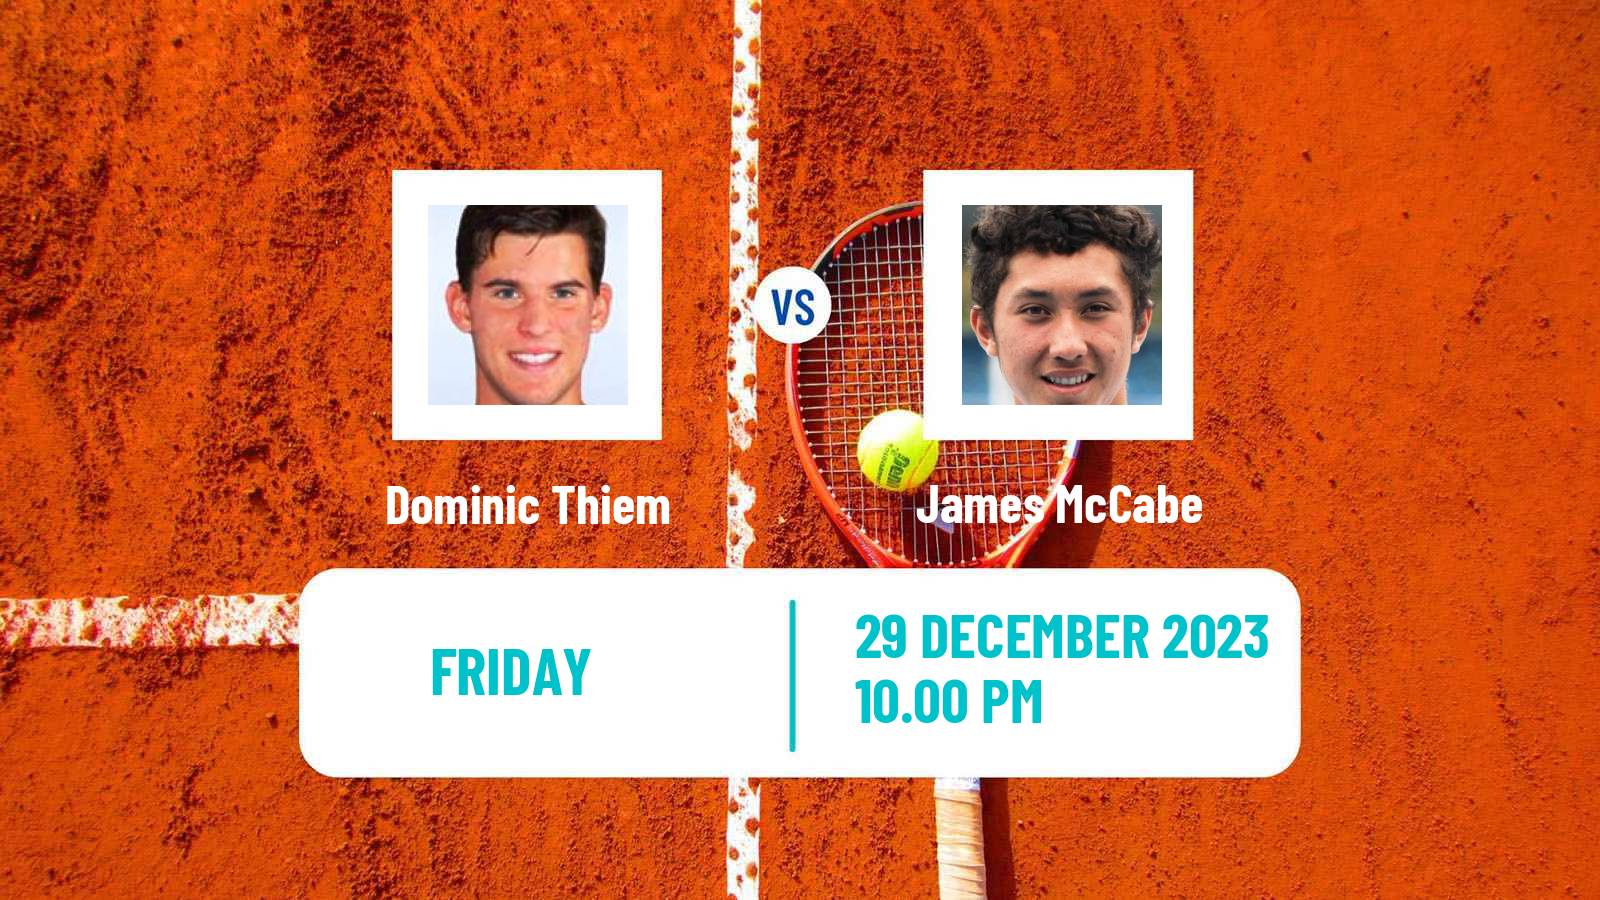 Tennis ATP Brisbane Dominic Thiem - James McCabe